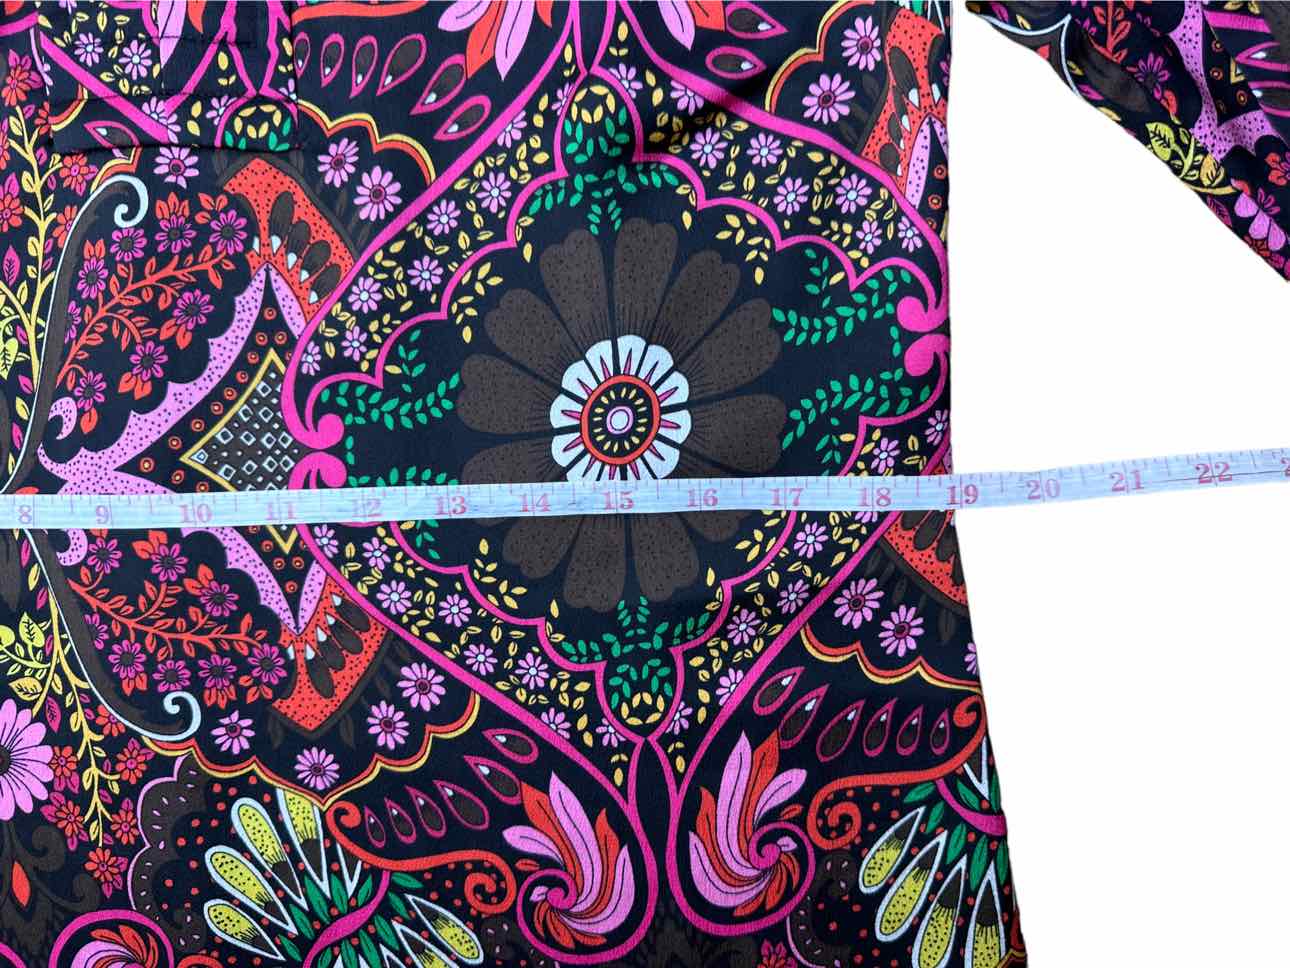 TRINA TURK NWT Floral Print CHRISTIE Dress Size 8